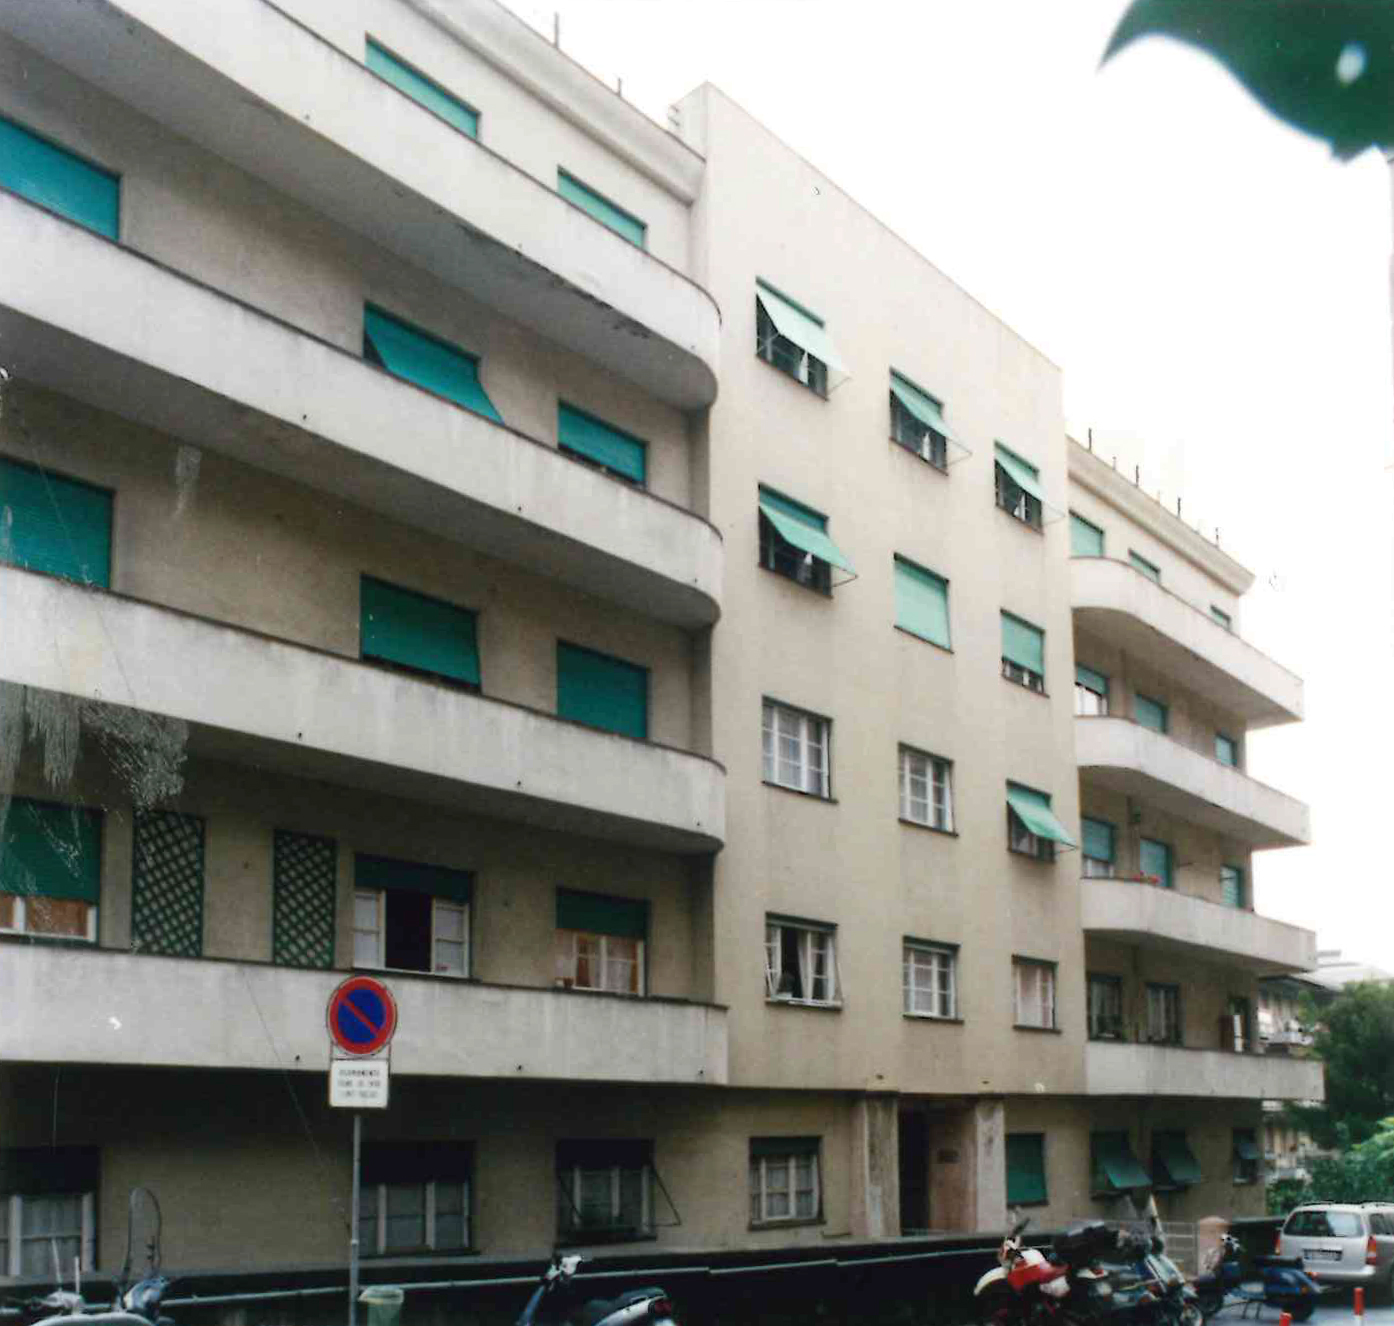 palazzo in Via Montello (palazzo) - Genova (GE)  (XX)